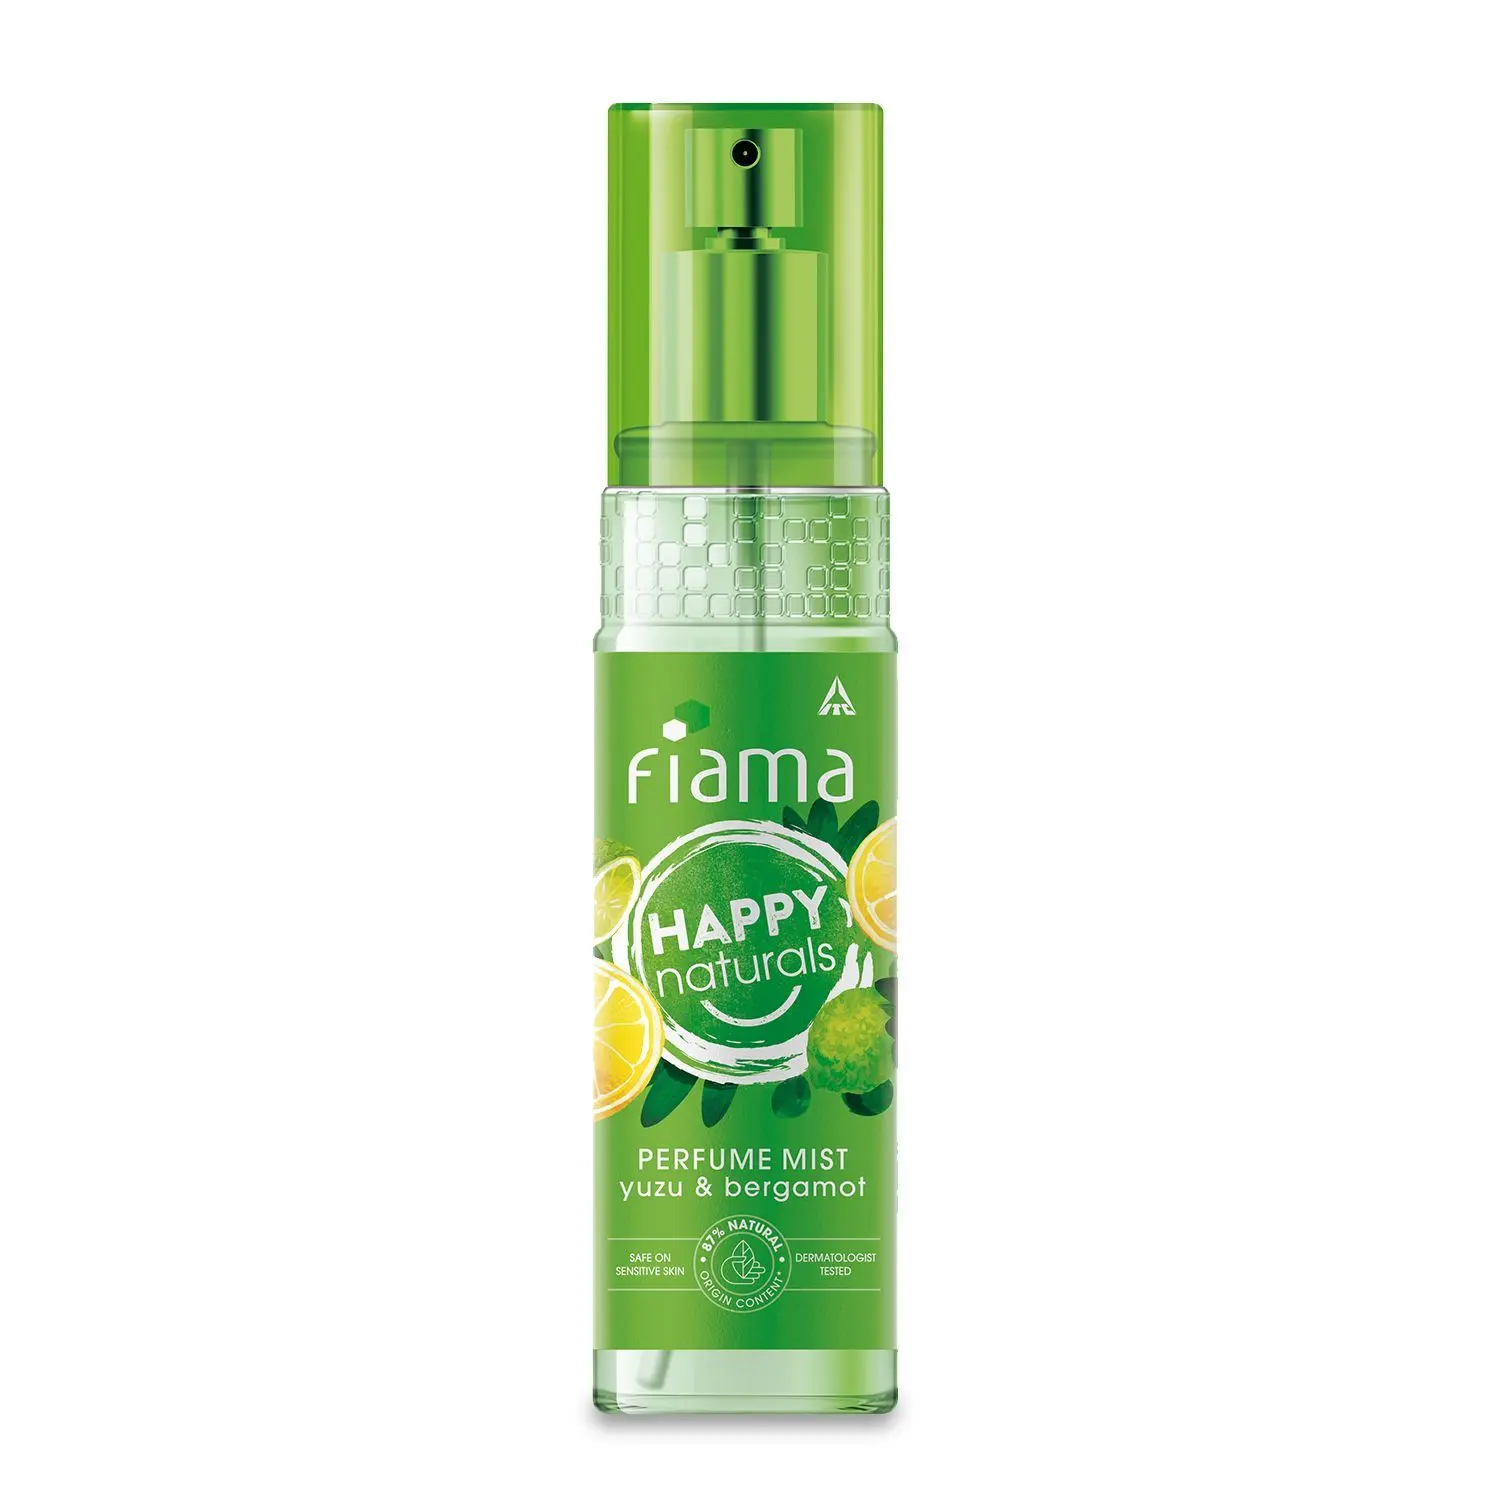 Fiama Happy Naturals Perfume Mists, Yuzu and Bergamot, 87% Natural origin content, skin friendly PH, long lasting fragrance, 120ml bottle